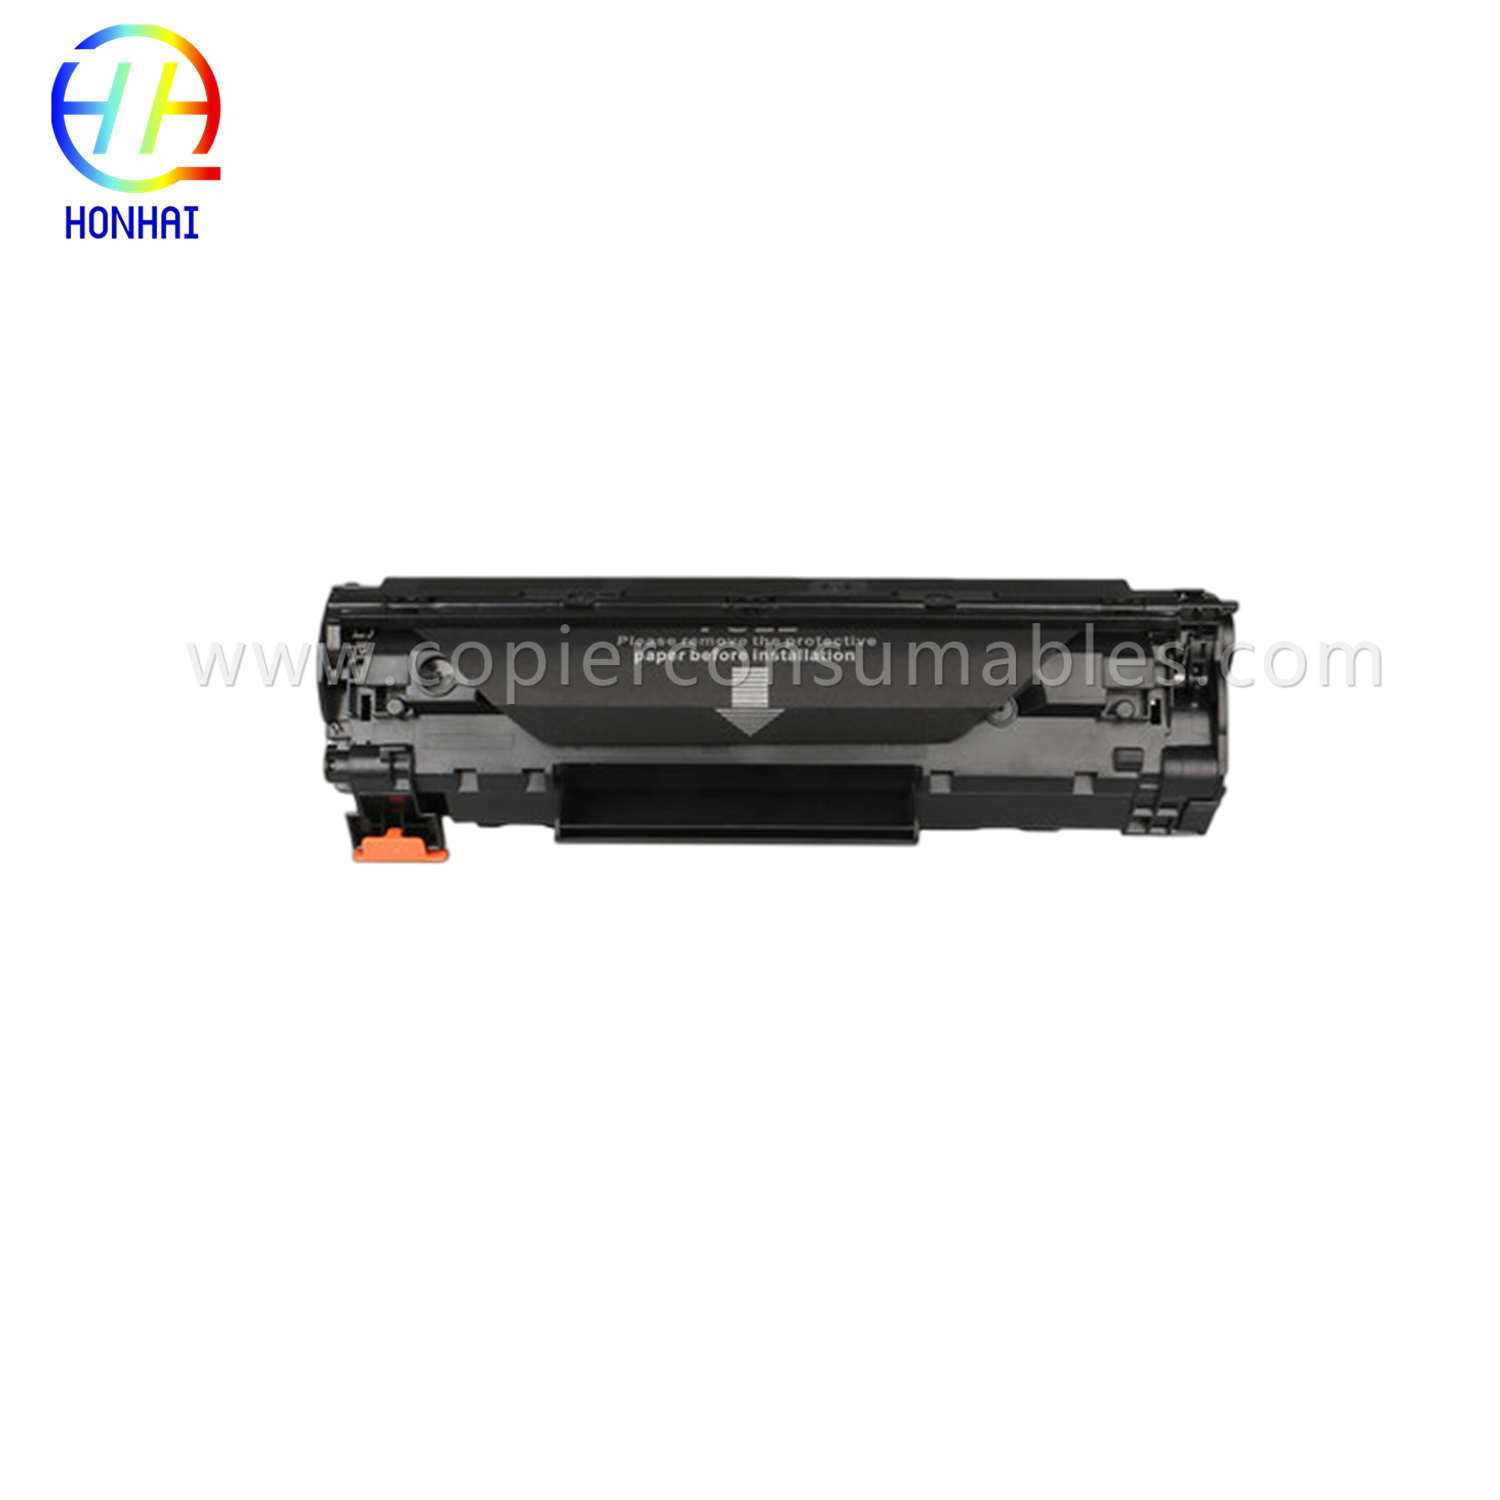 https://www.copierhonhaitech.com/toner-cartridge-for-hp-laserjet-pro-m12w-mfp-m26-m26nw-79a-cf279a-oem-product/